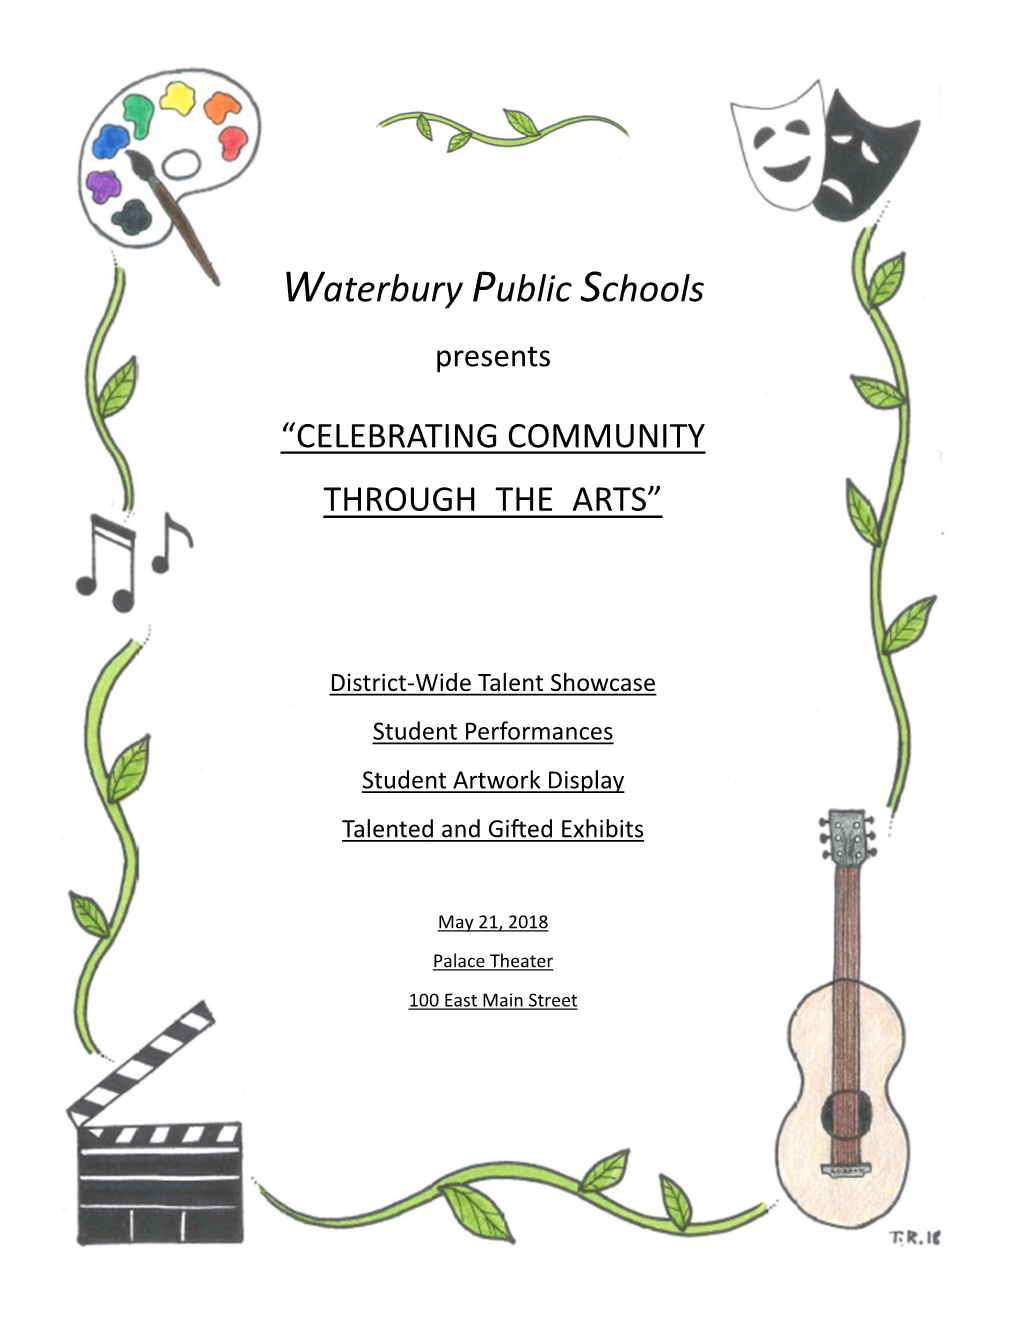 Celebrating Community Through the Arts”